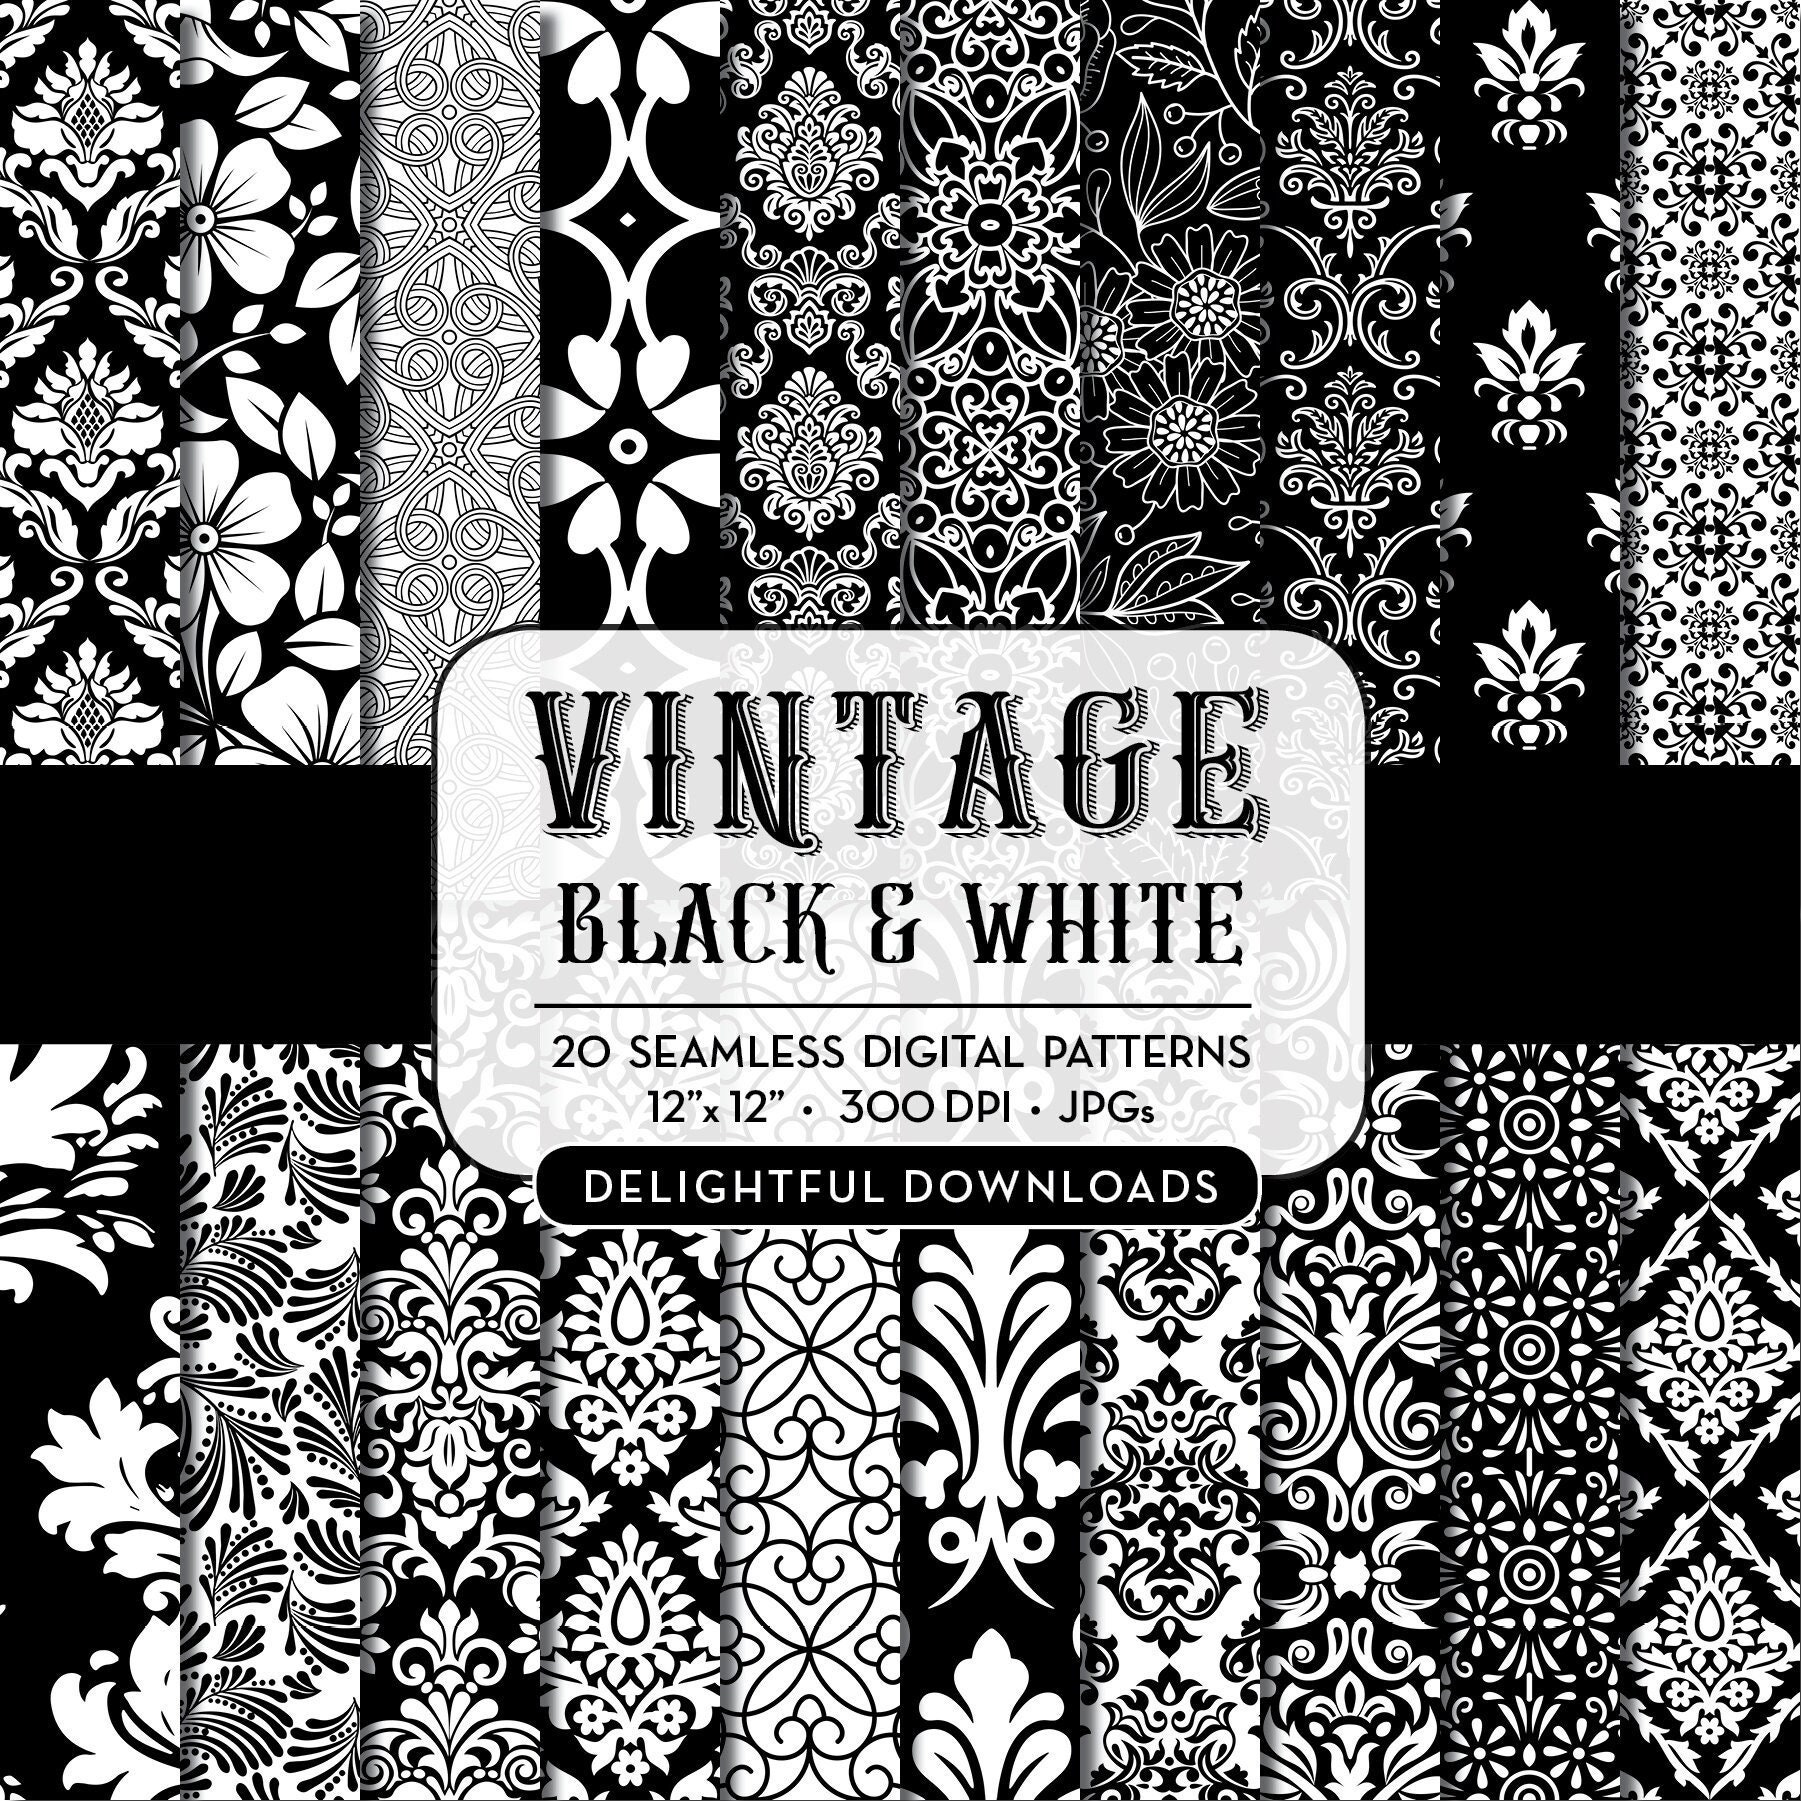 BLACK & WHITE Classic Pattern Digital Paper Printable Black White Scrapbook  Background Black Papers Cardscraft Supplies 300dpi 12x12 P046 